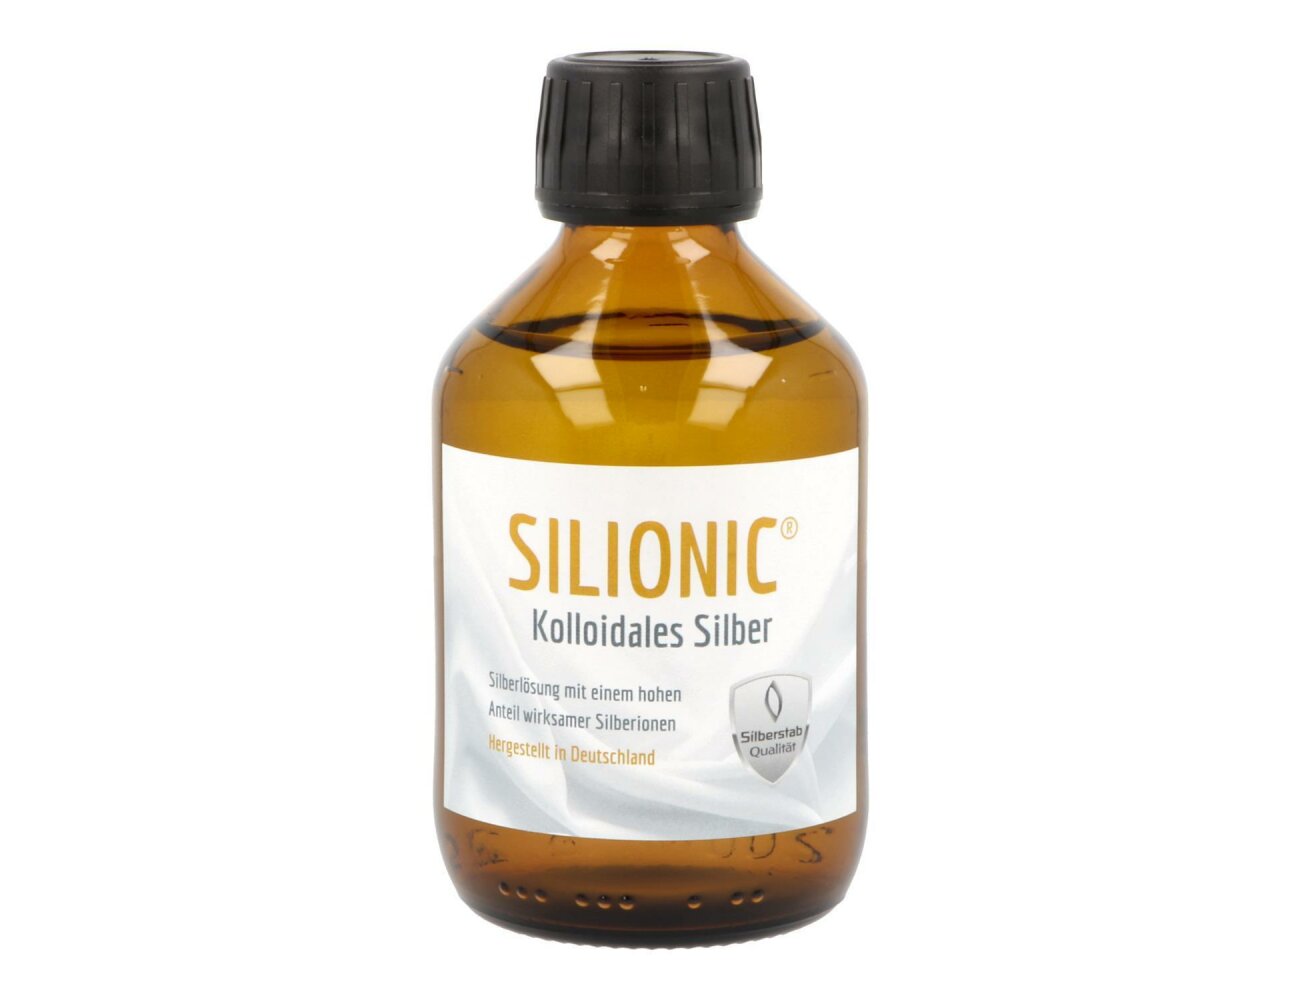 Silionic Kolloidales Silber, 50 ppm, 200 ml